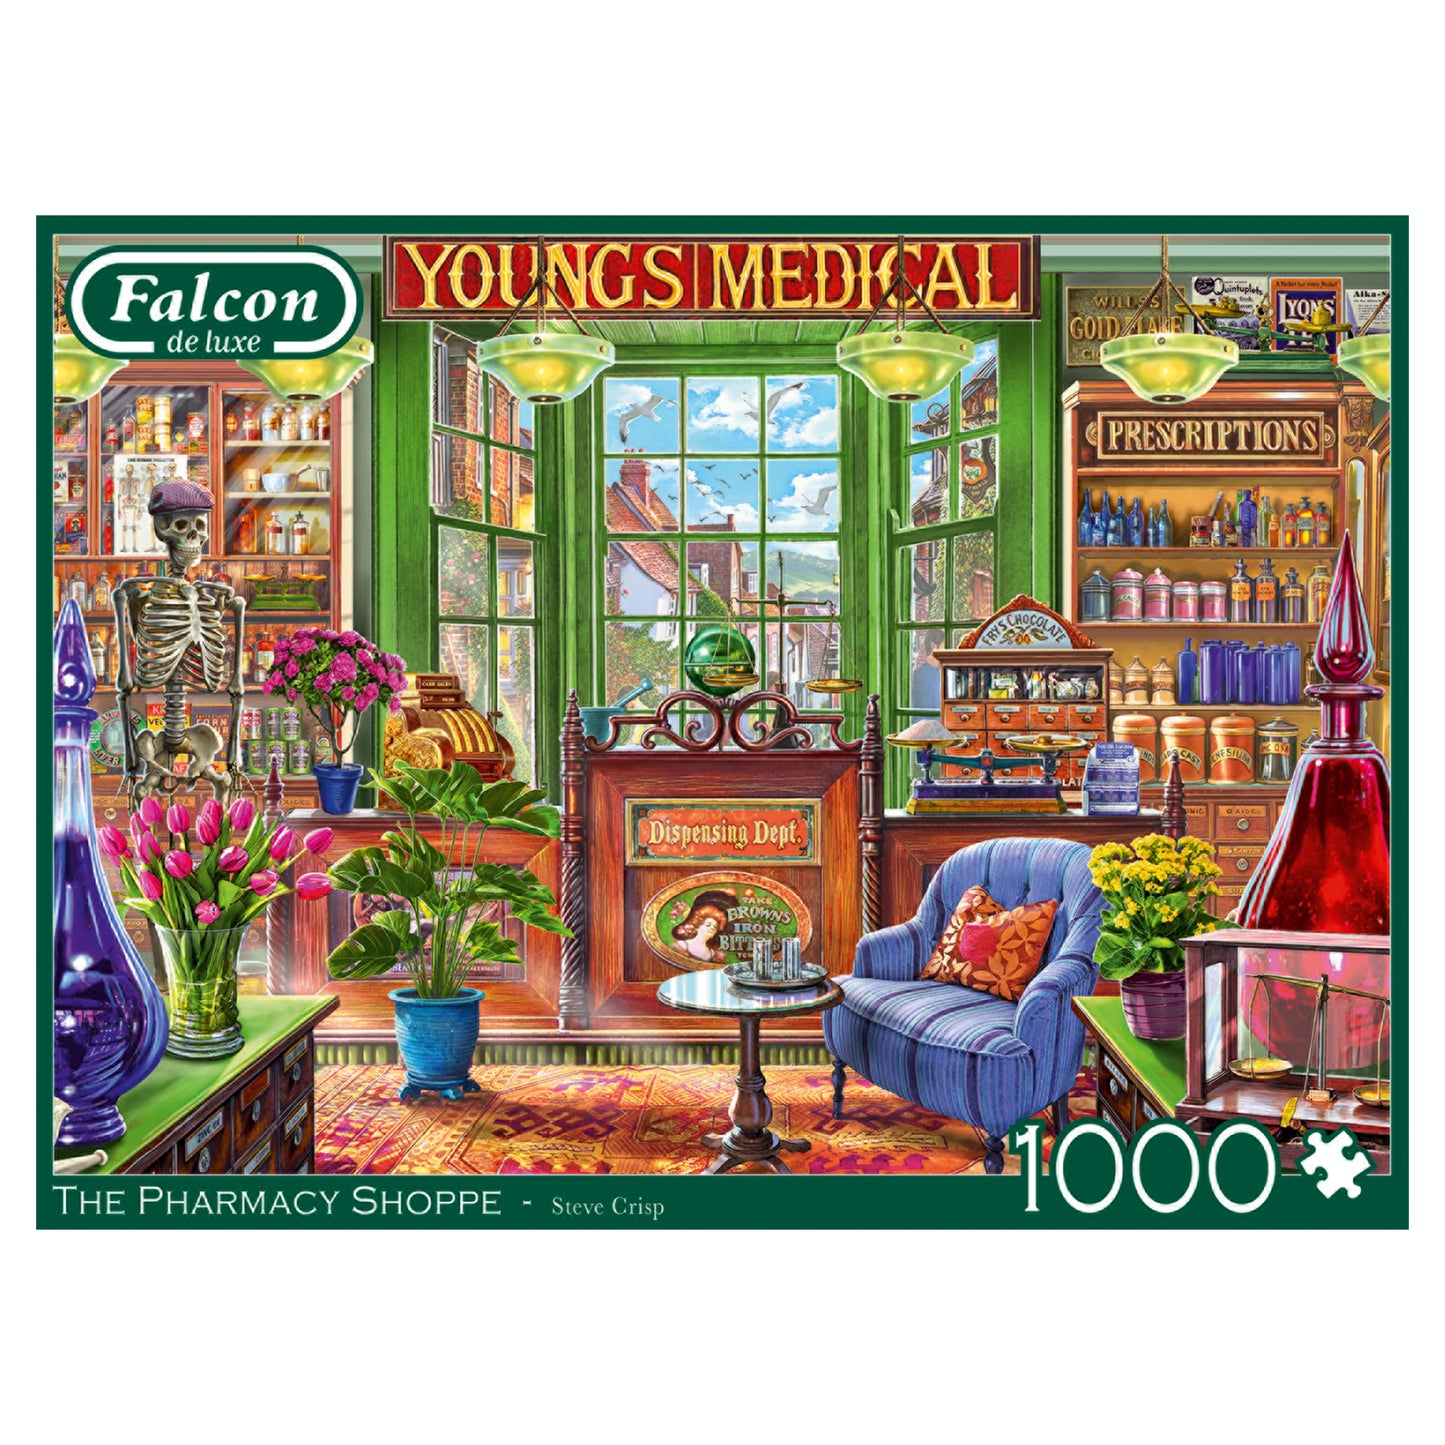 Falcon - The Pharmacy Shoppe (1000 pieces) - product image - Jumboplay.com